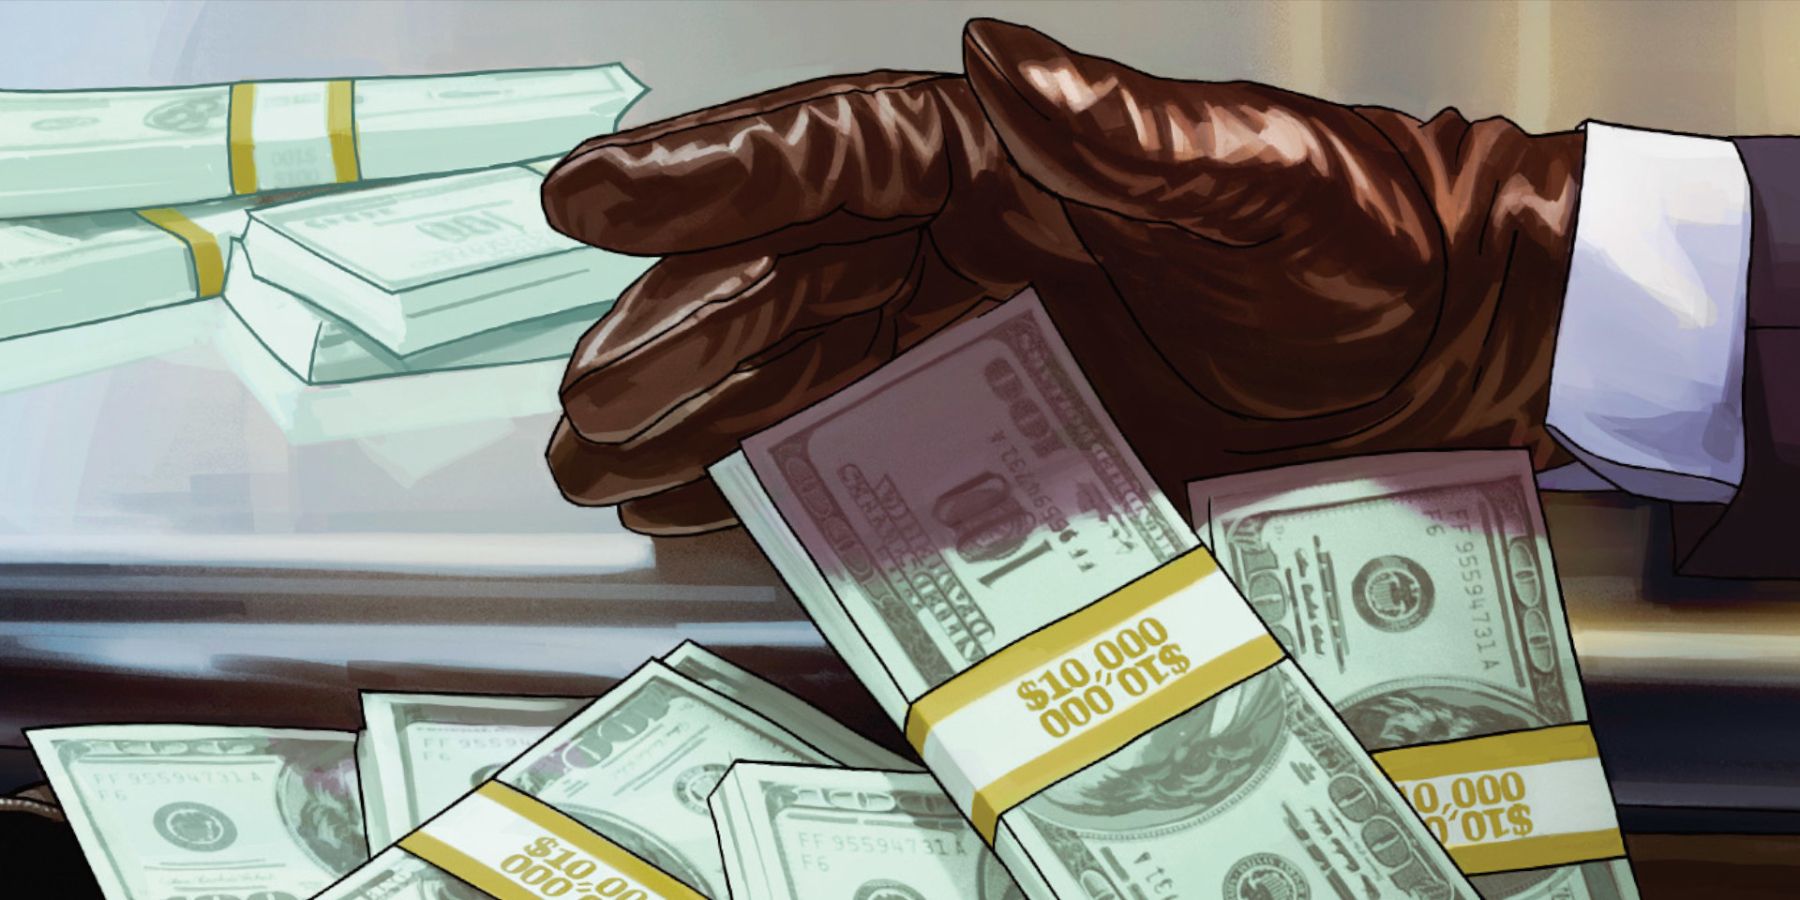 GTA 5 - FREE $16000000 In GTA 5 Online! GTA 5 FREE Extra Money Not Money  Glitch! (GTA V Money) 